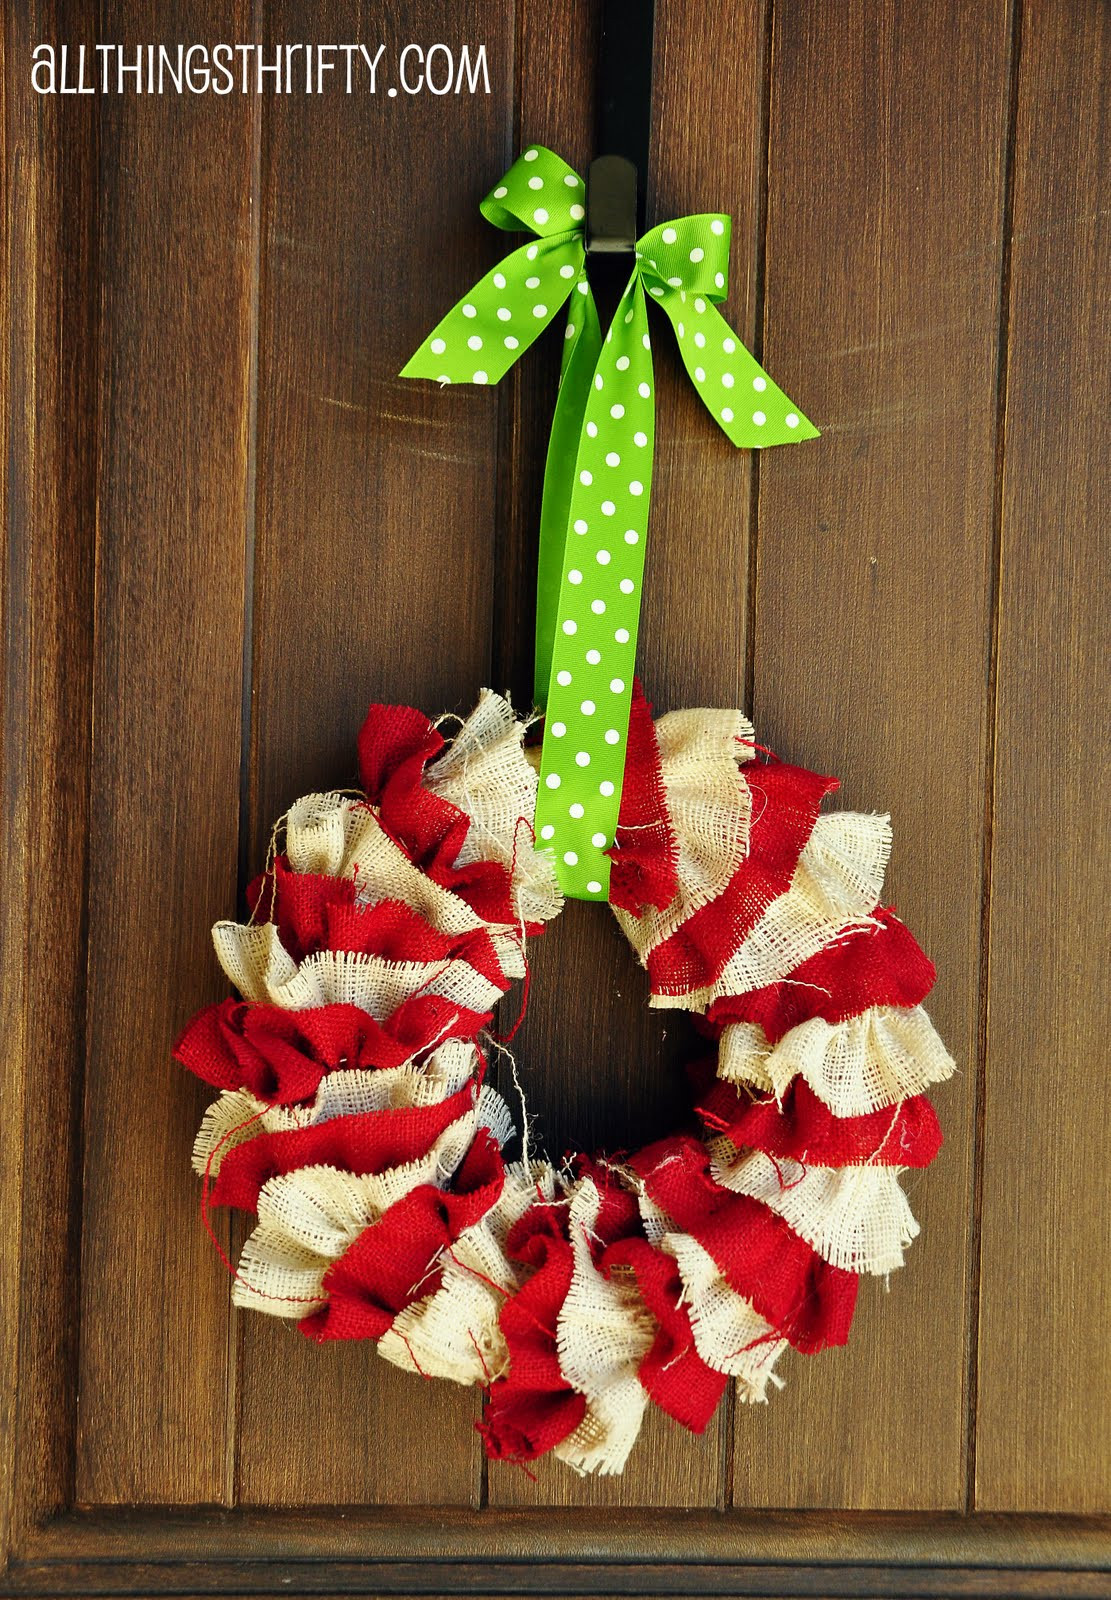 Best ideas about DIY Christmas Wreaths
. Save or Pin Tutorial DIY Christmas Wreath Now.